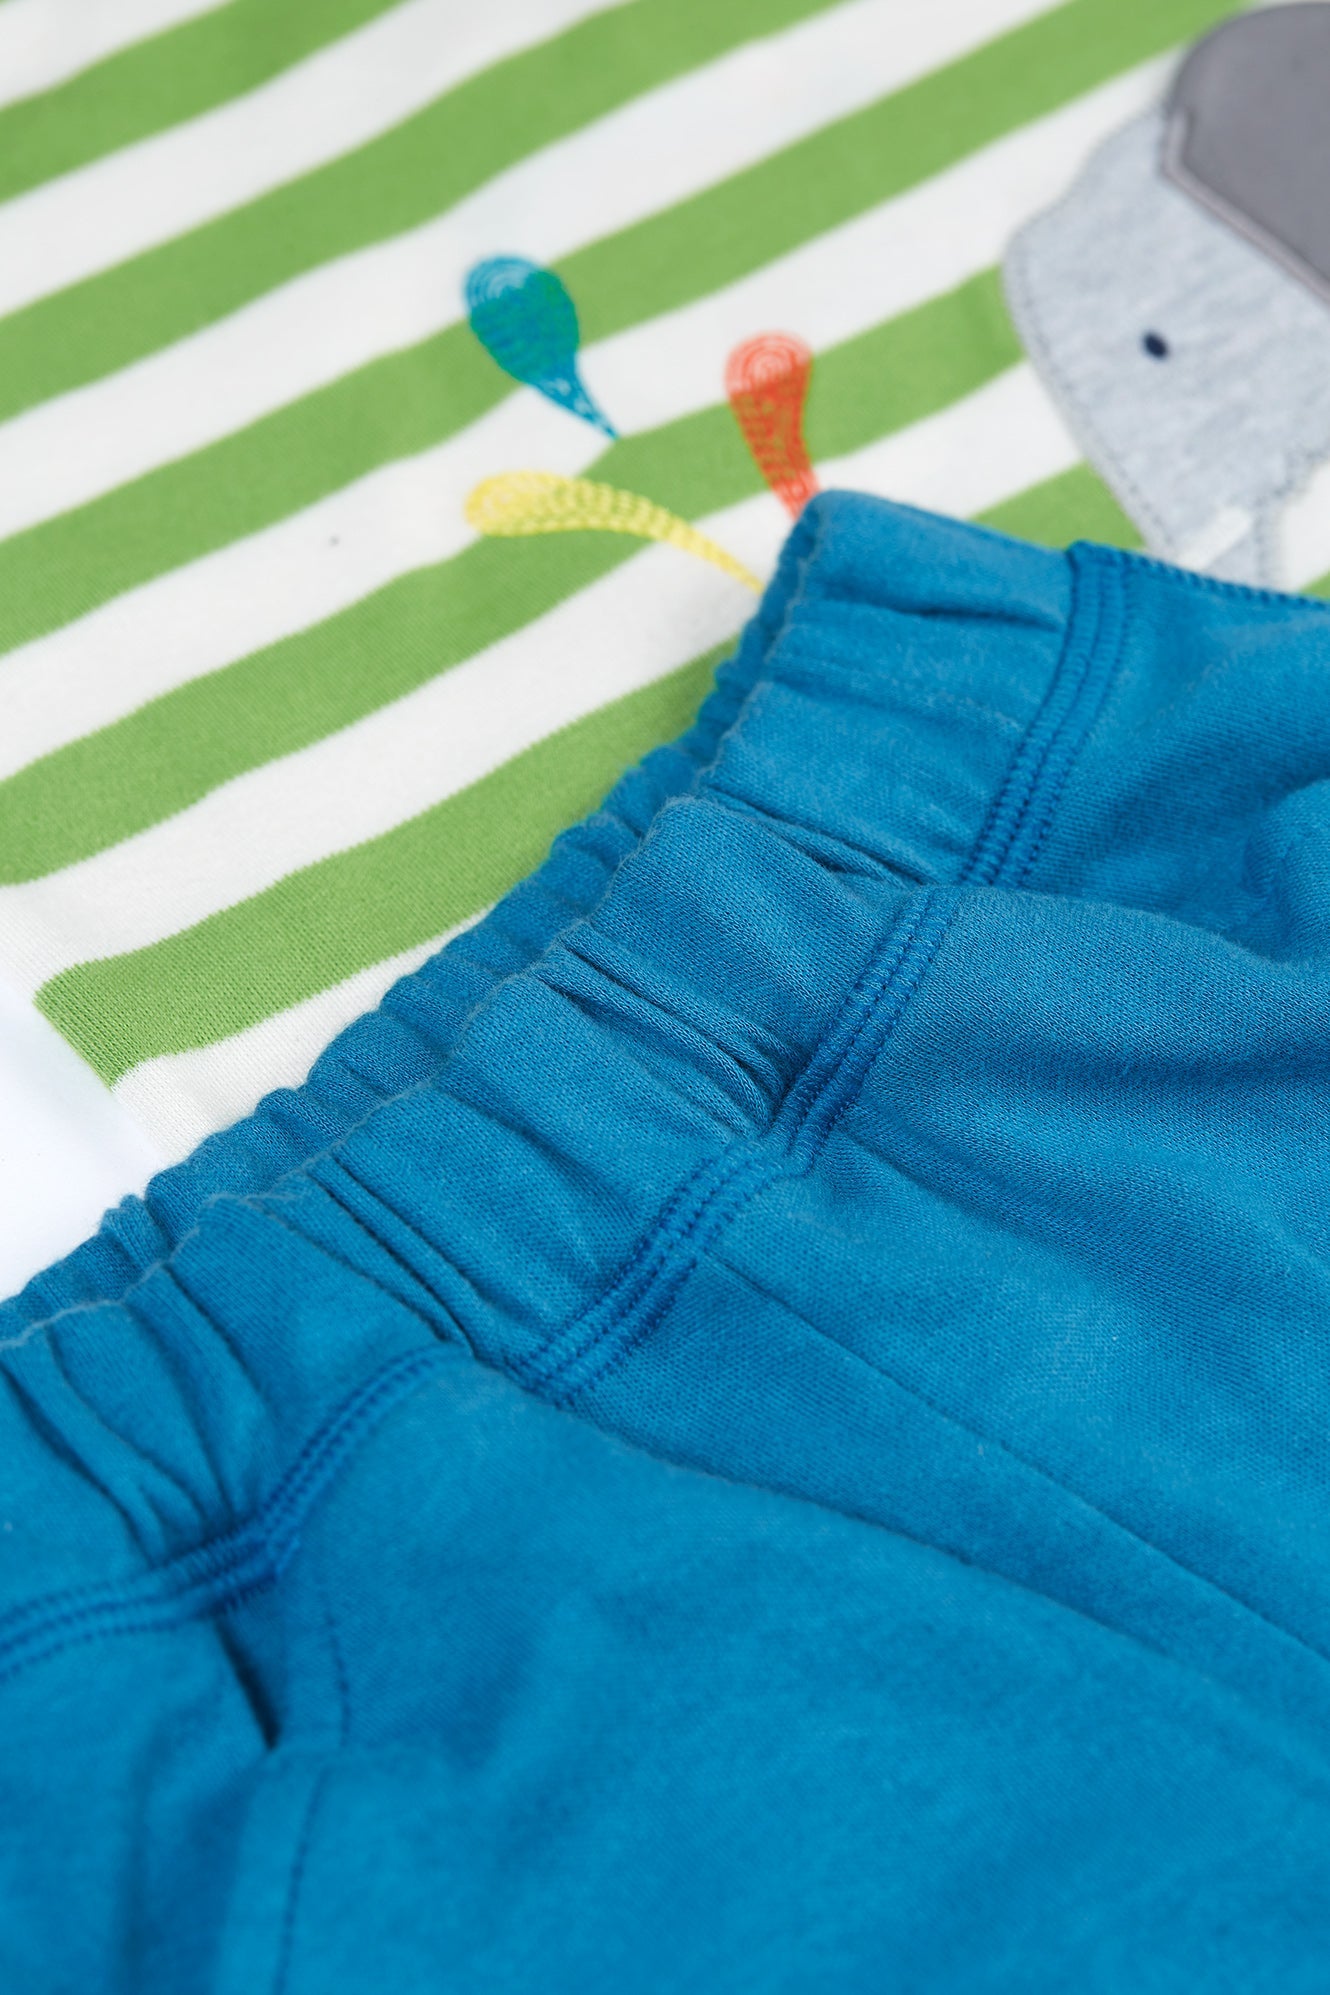 Frugi Easy On Wrap Around Outfit - Kiwi Stripe/Elephant-Kids-Ohh! By Gum - Shop Sustainable